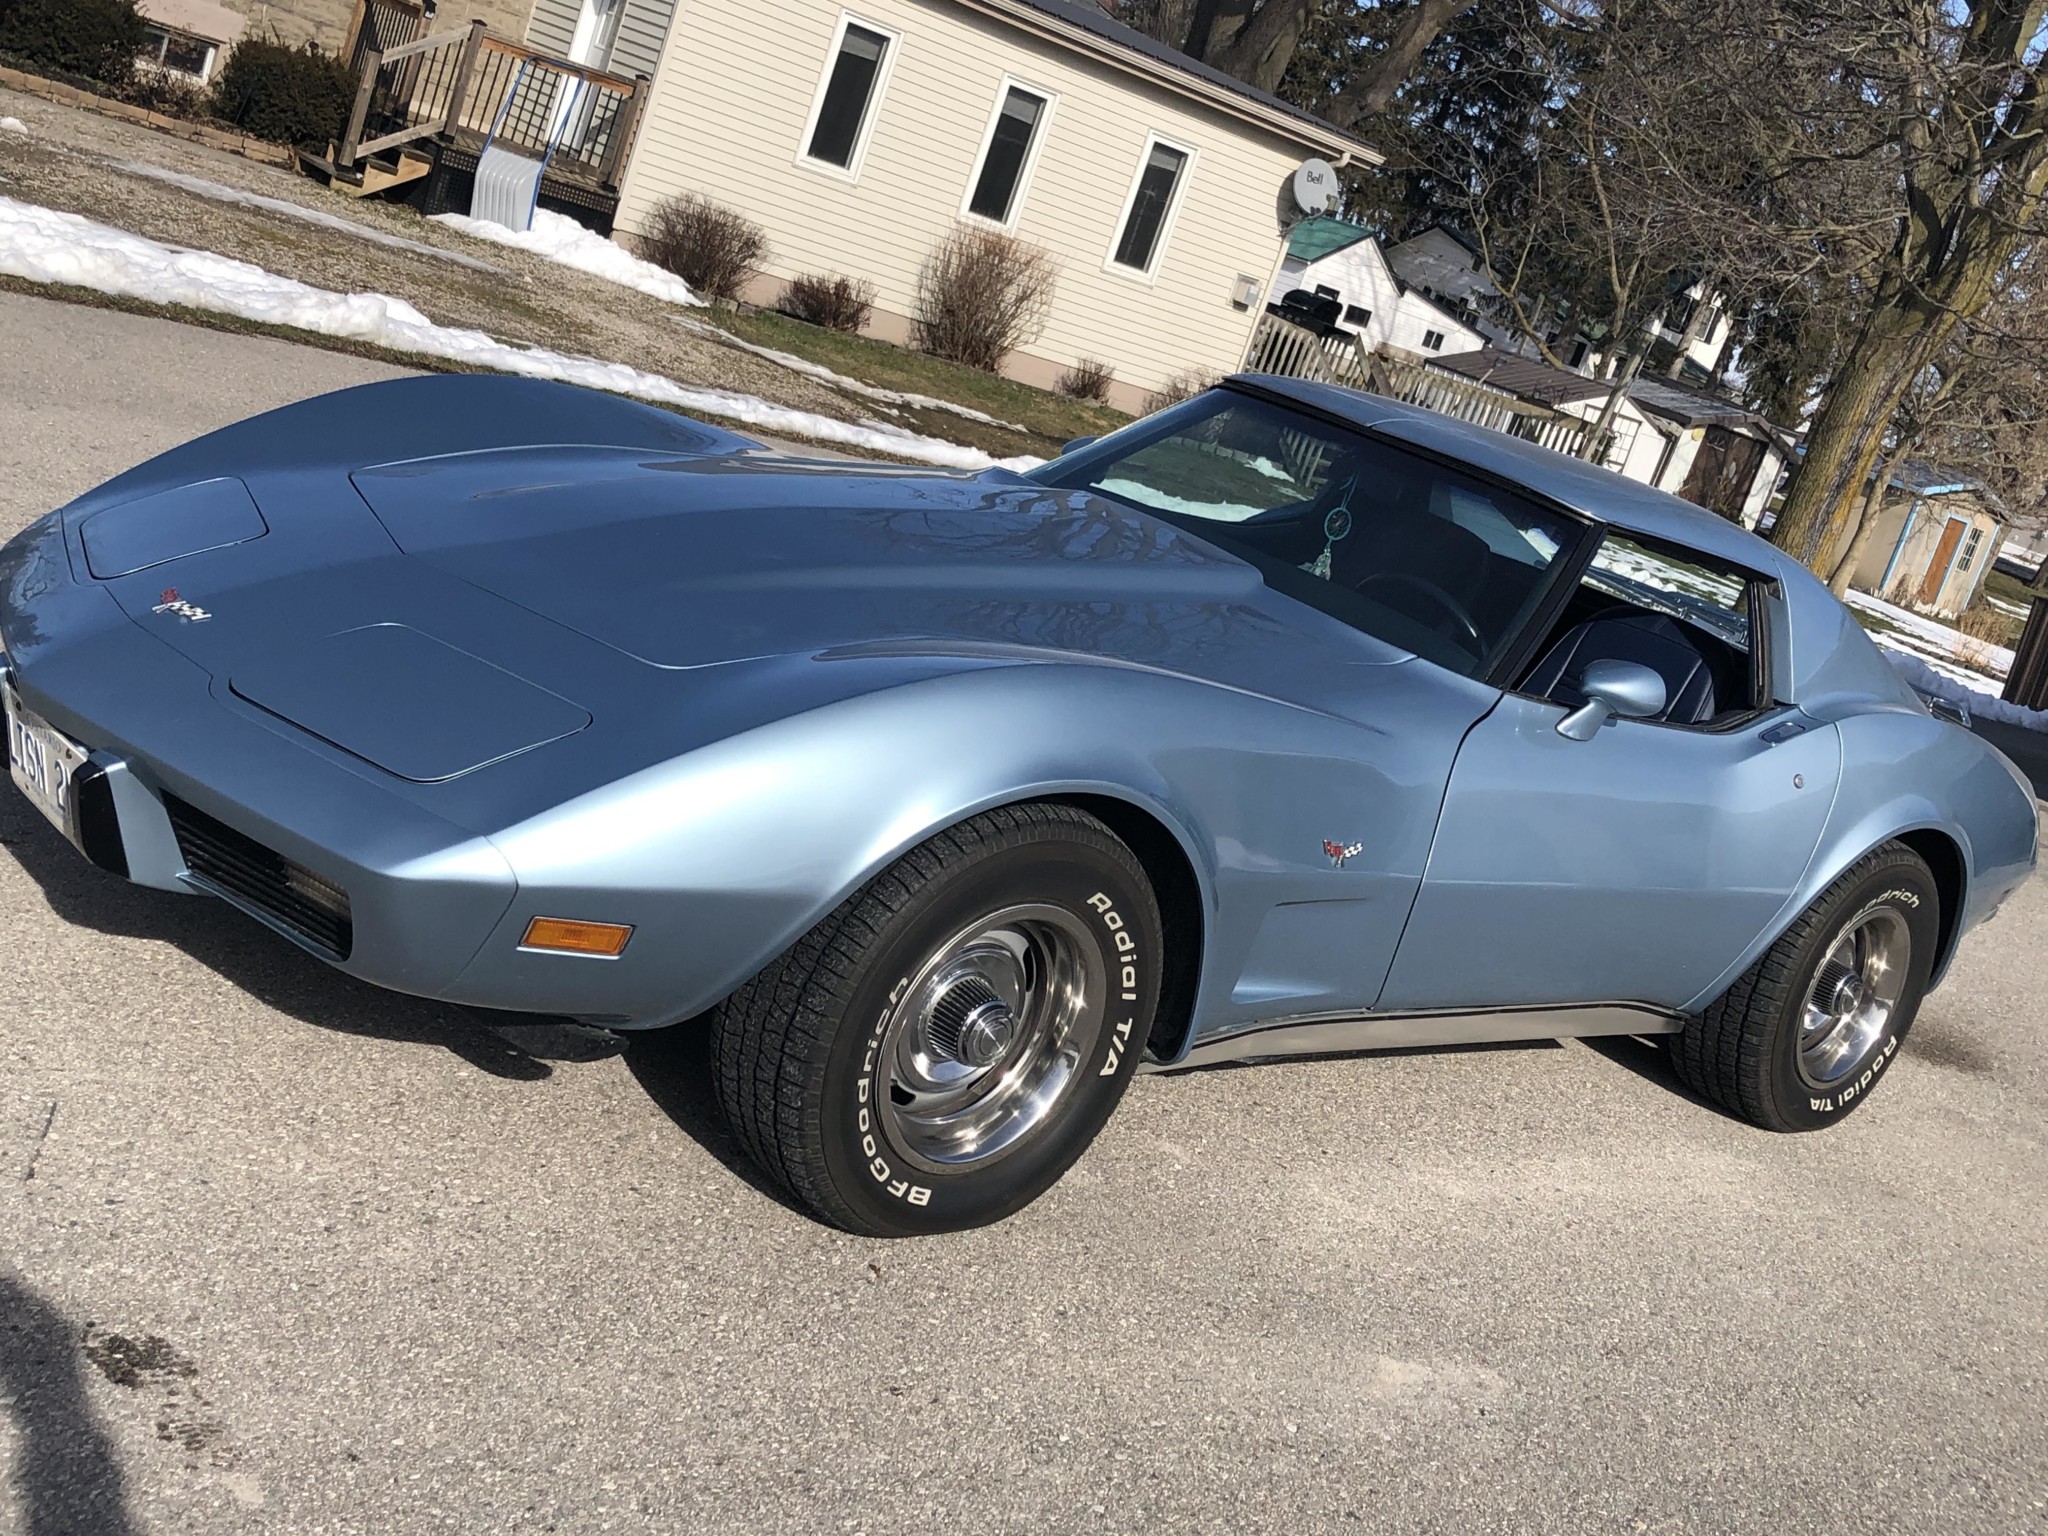 This 1977 Corvette is available for sale at bringatrailer.com